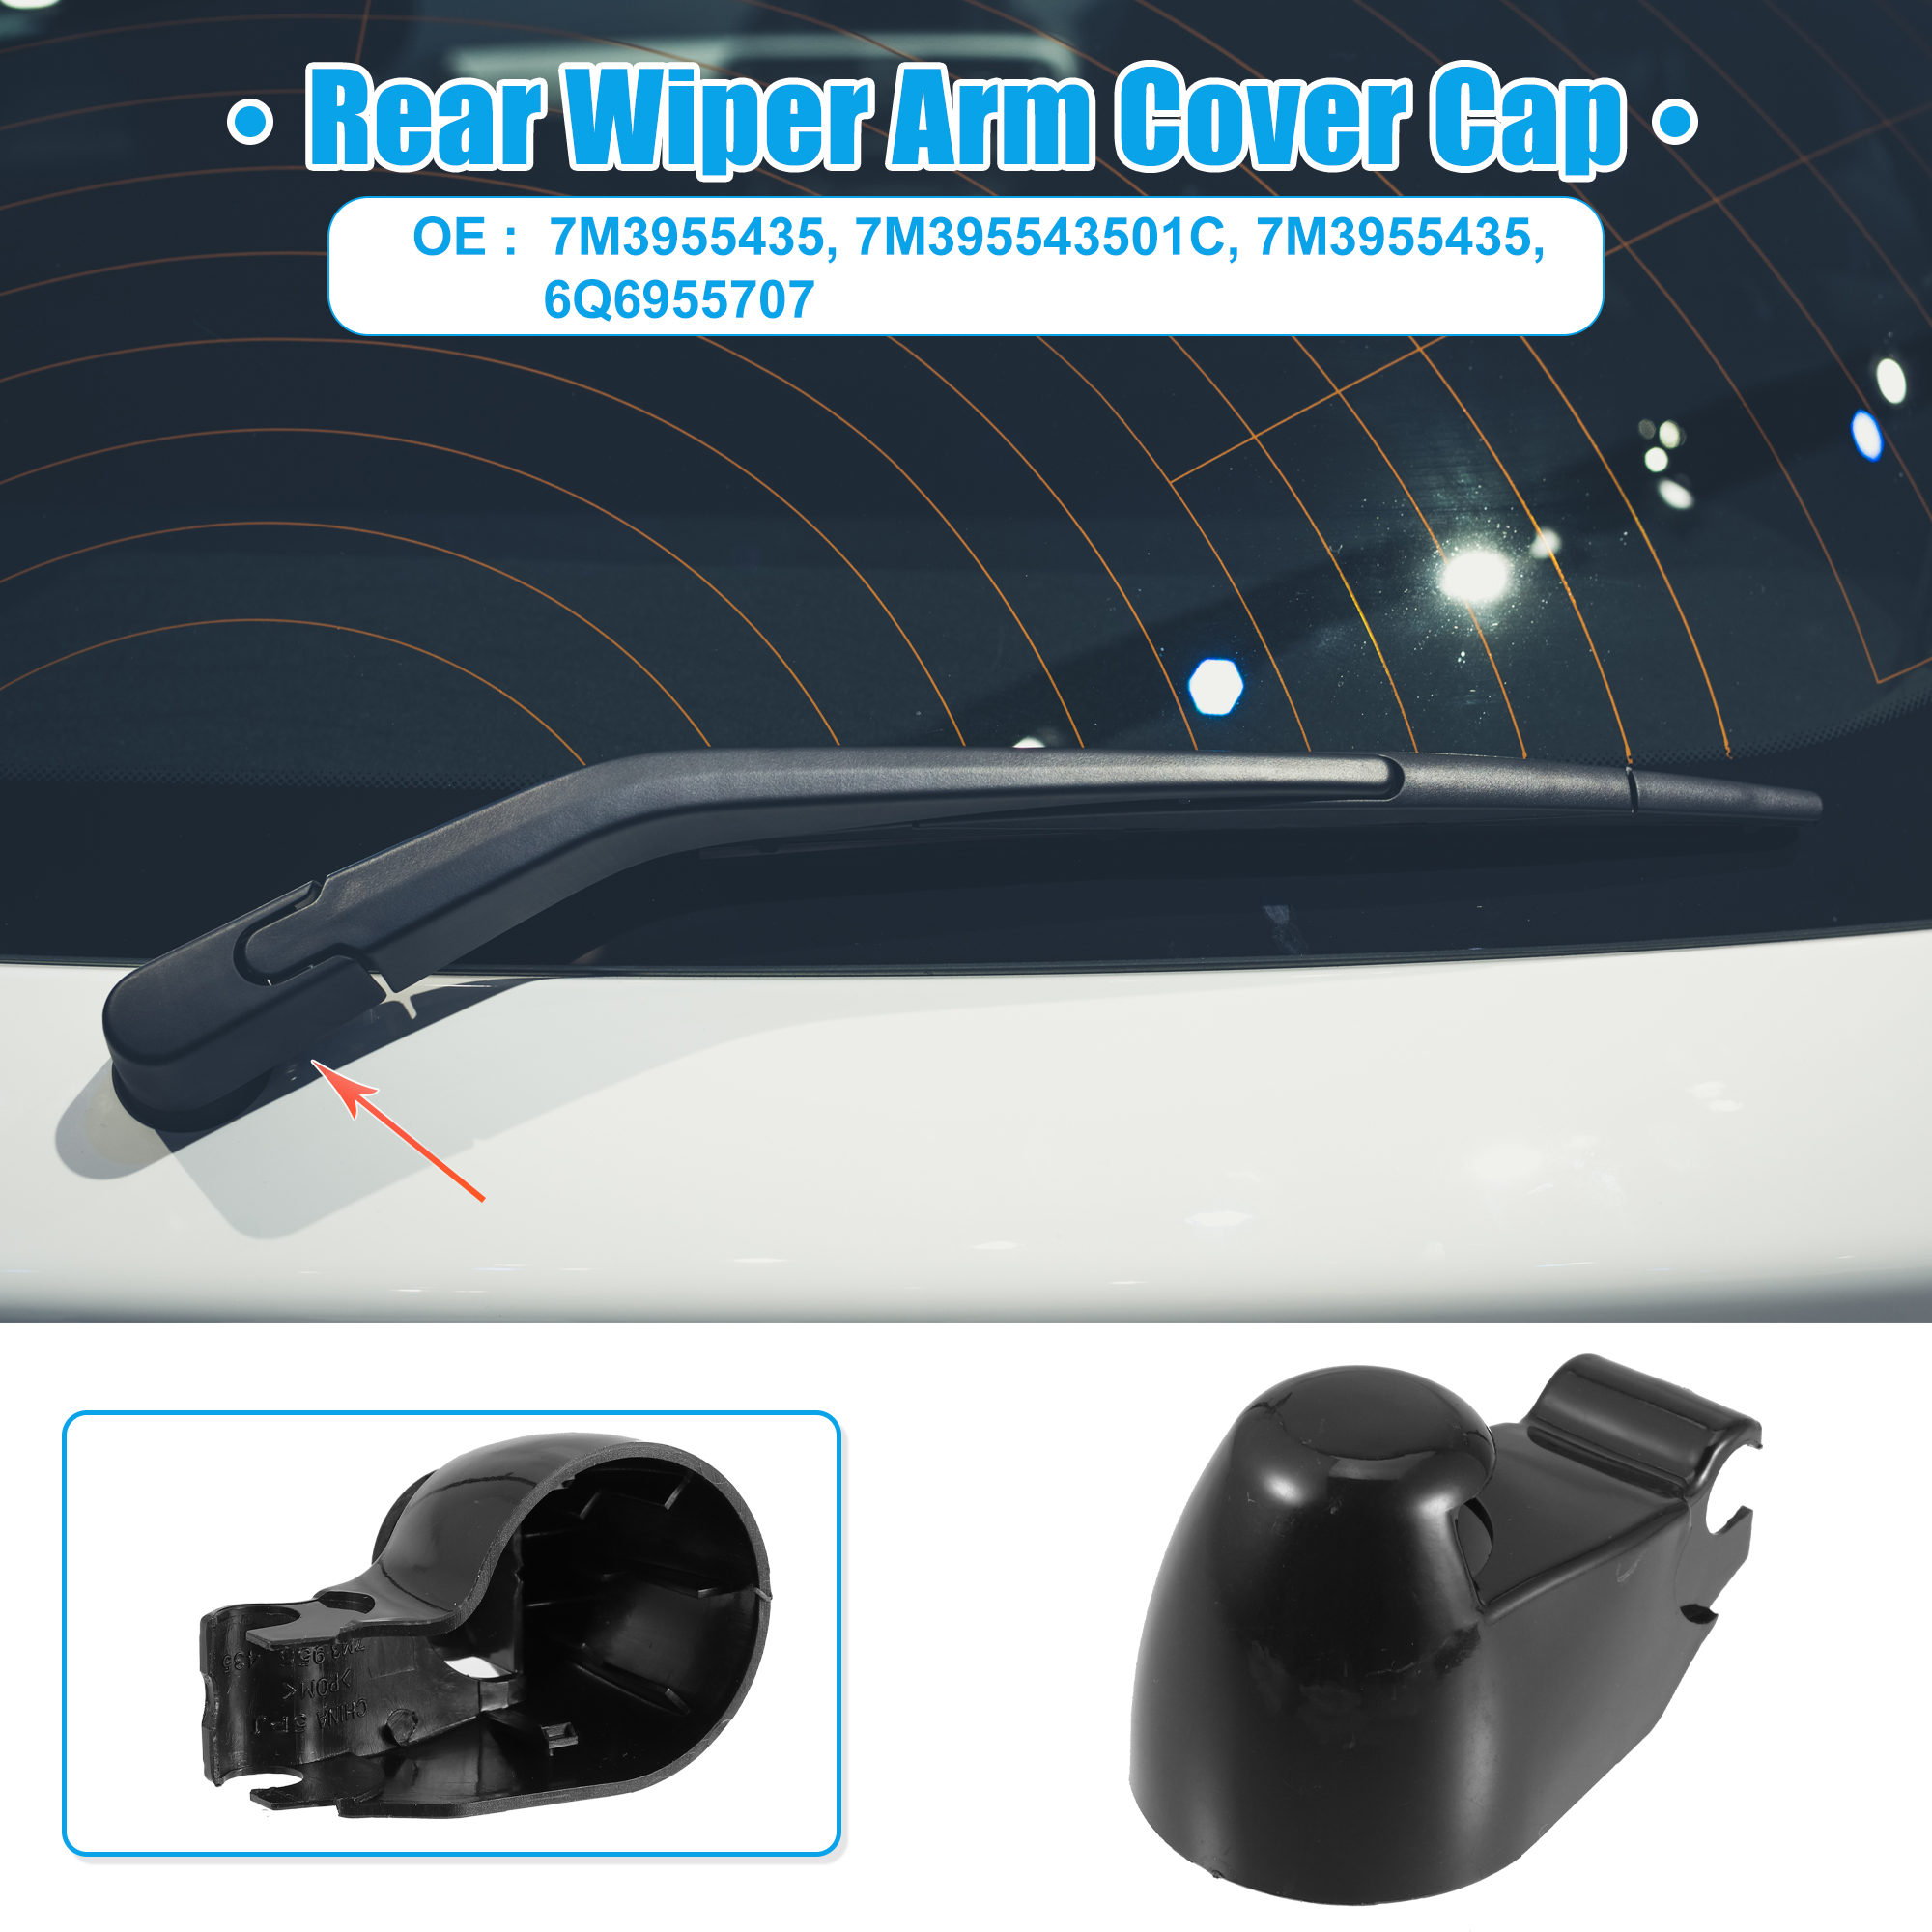 Unique Bargains Car Rear Windshield Wiper Arm Cover Cap 7M3955435 for VW GTI 2006-2009 Black